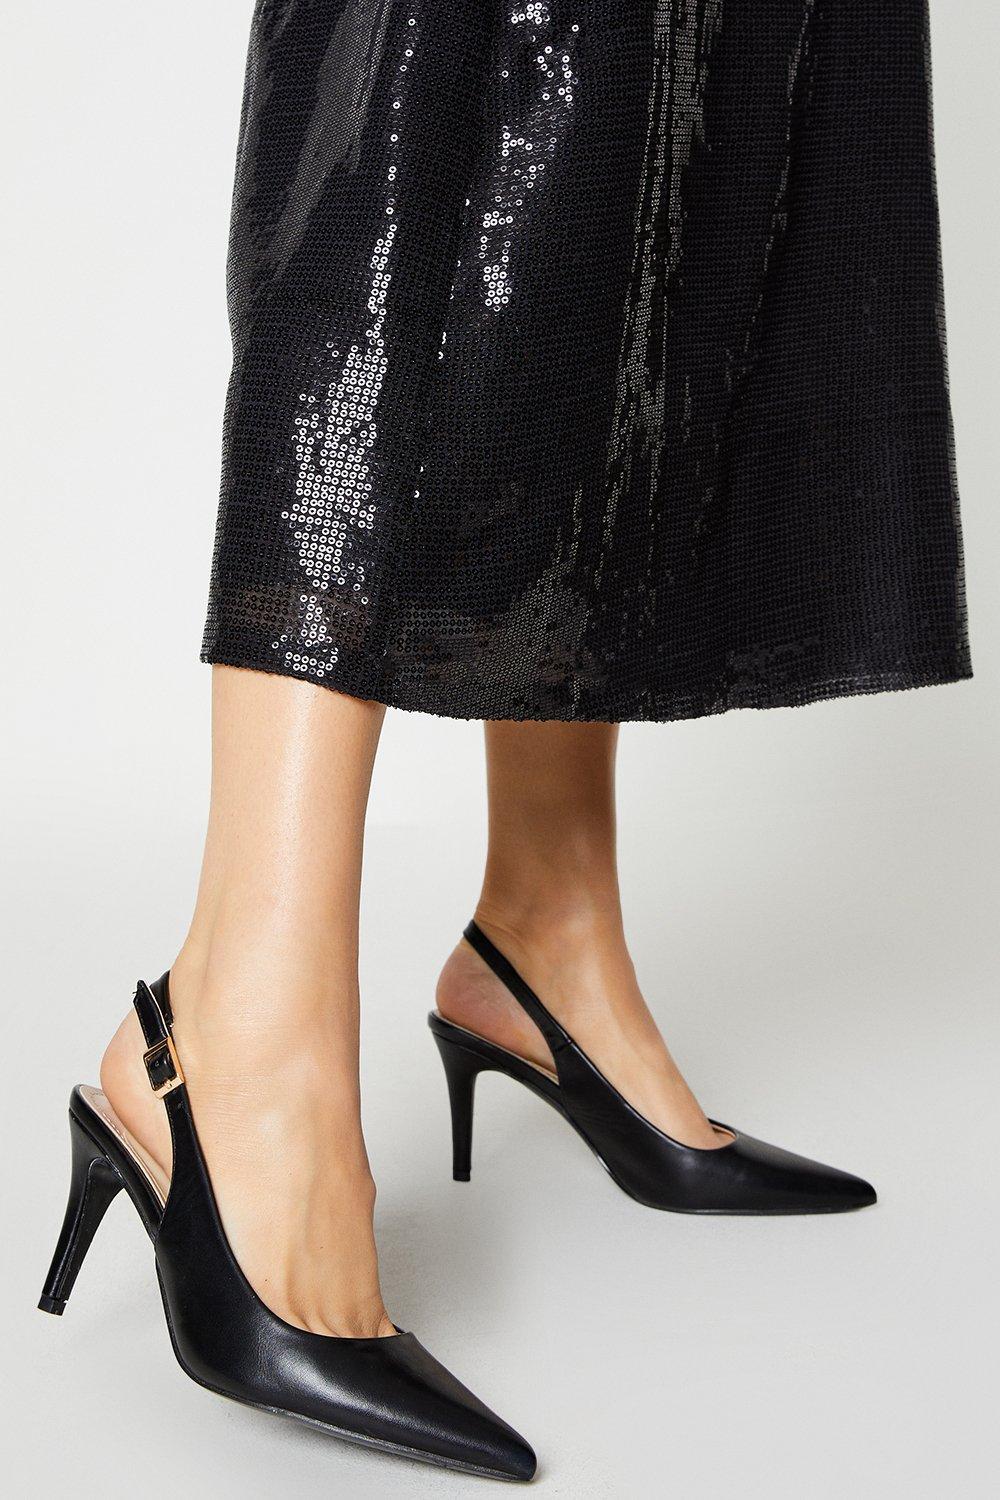 Women's Eden Comfort Stiletto Heel Sling Back Court Shoes - black - 3